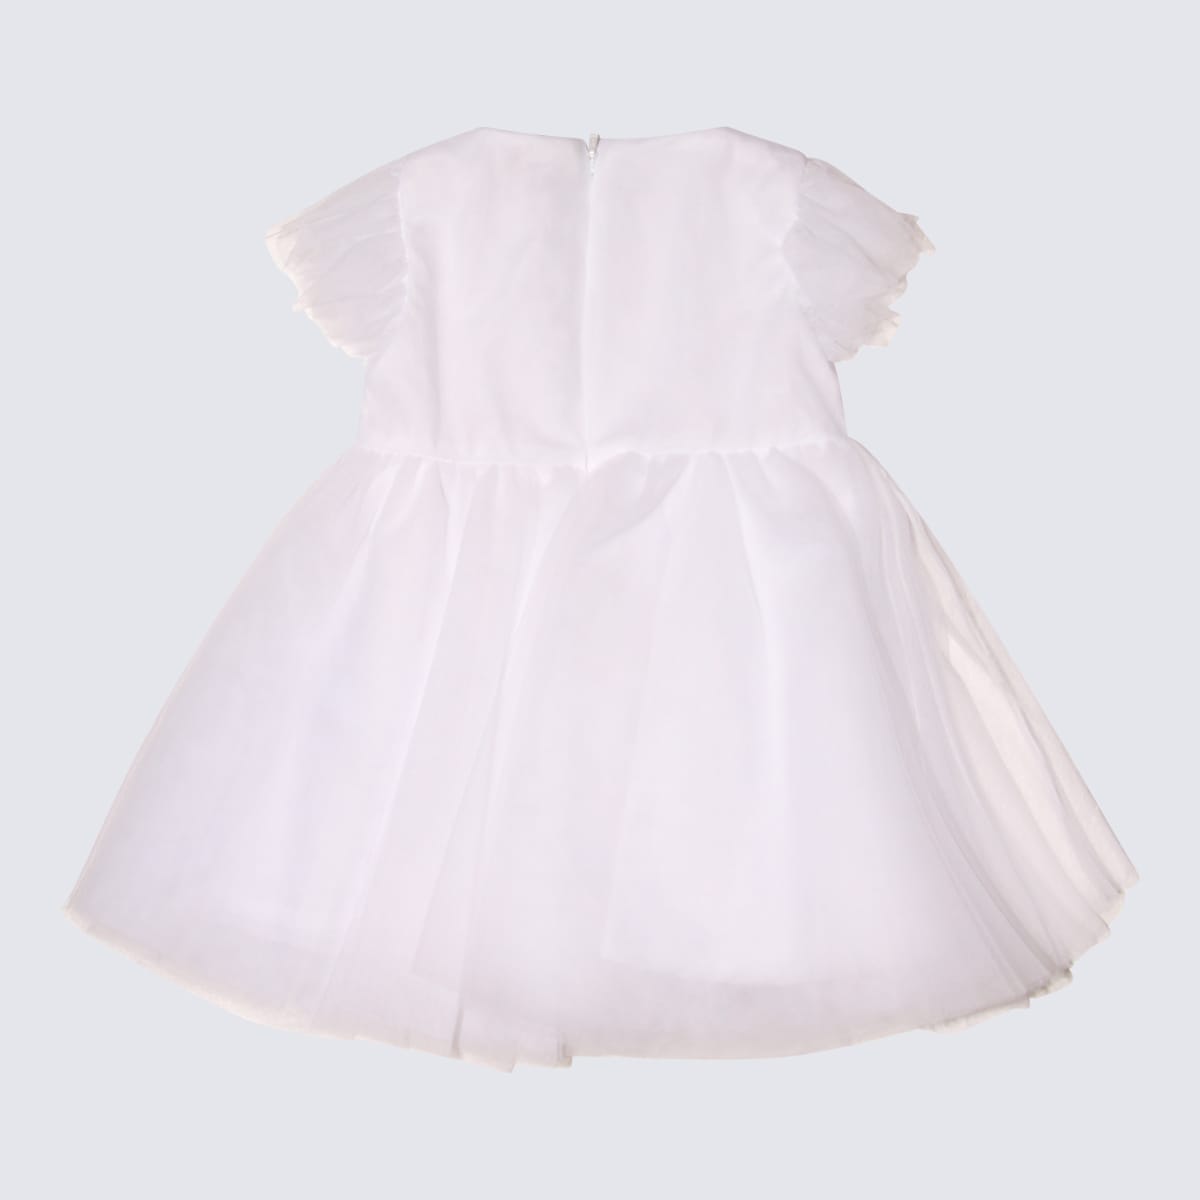 Monnalisa Babies' White Cotton Ruffles Dress